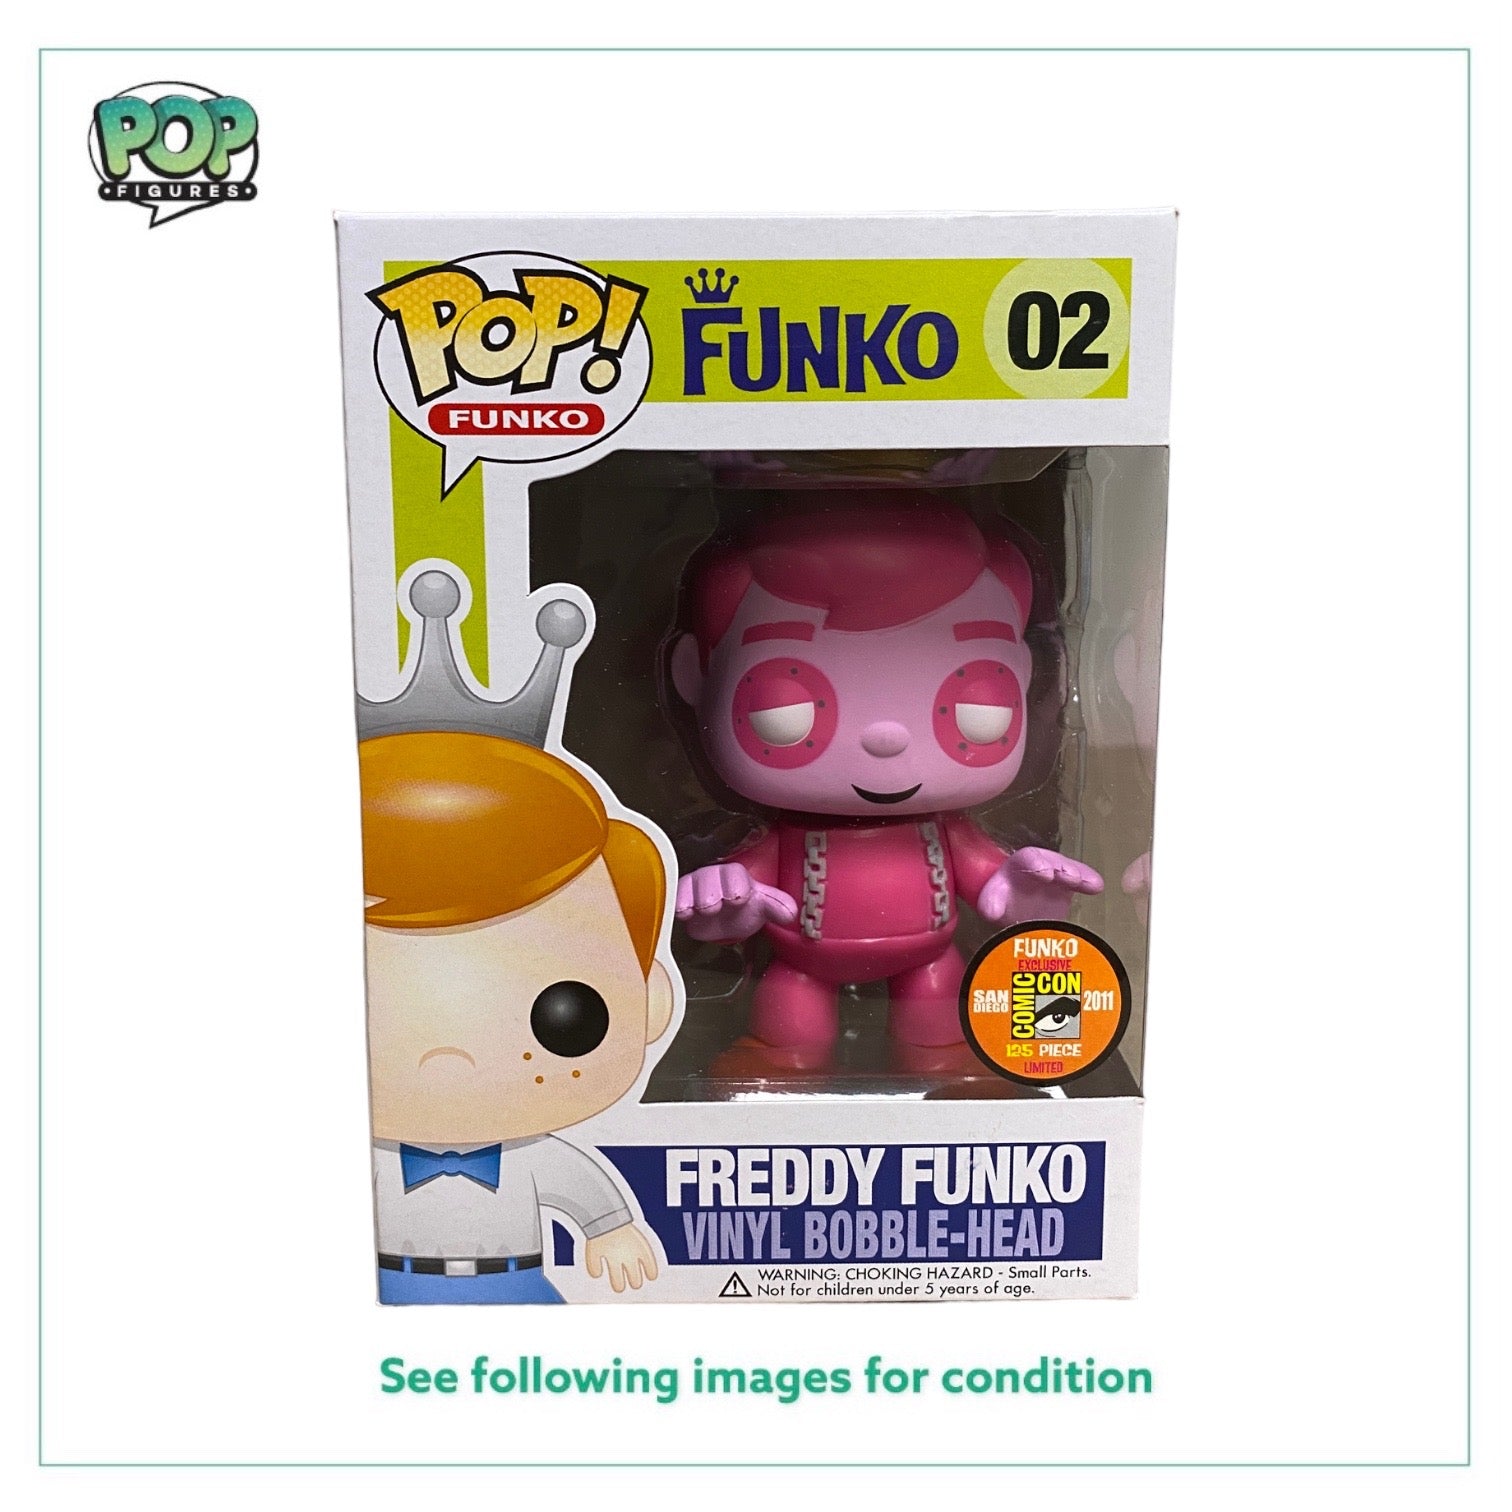 Freddy Funko as Franken Berry #02 Funko Pop! - SDCC 2011 Exclusive LE125 Pieces - Condition 8/10